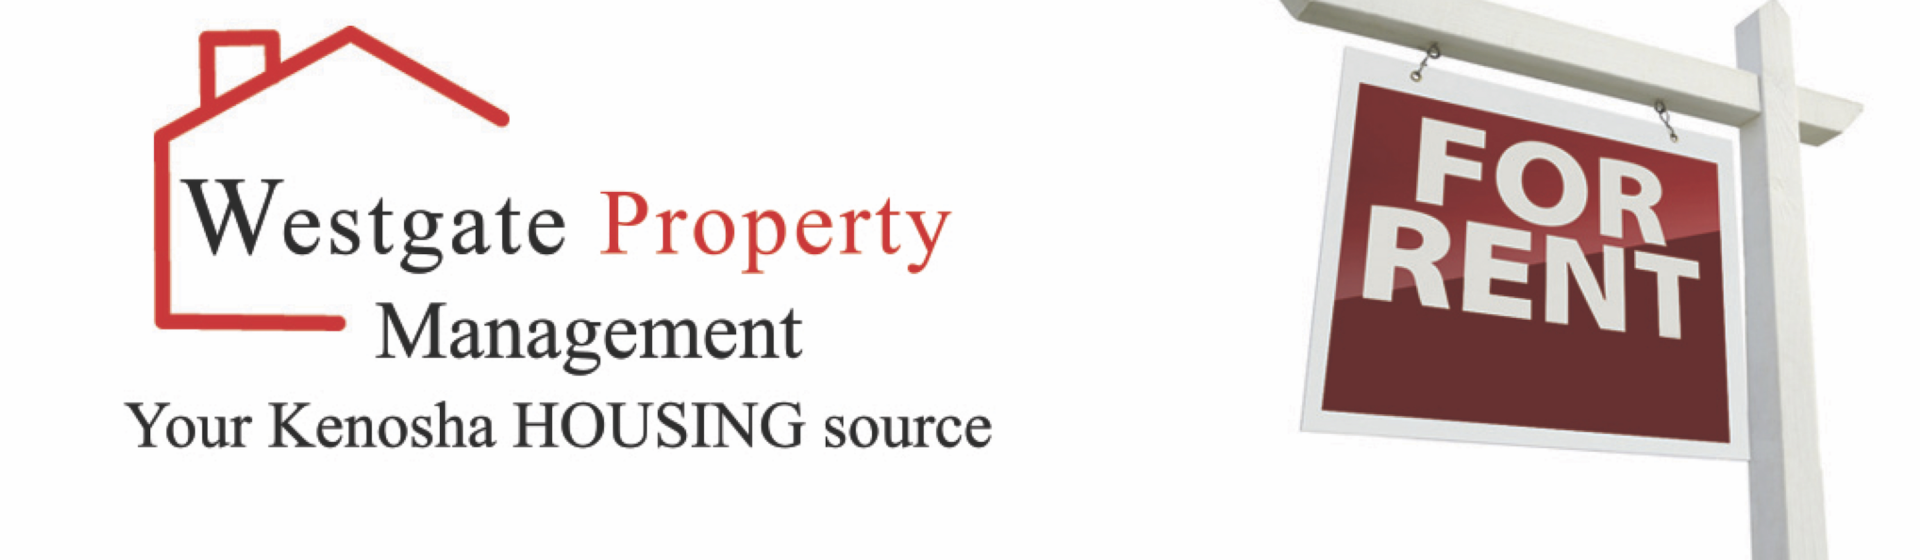 Westgate Property Management, LLC logo